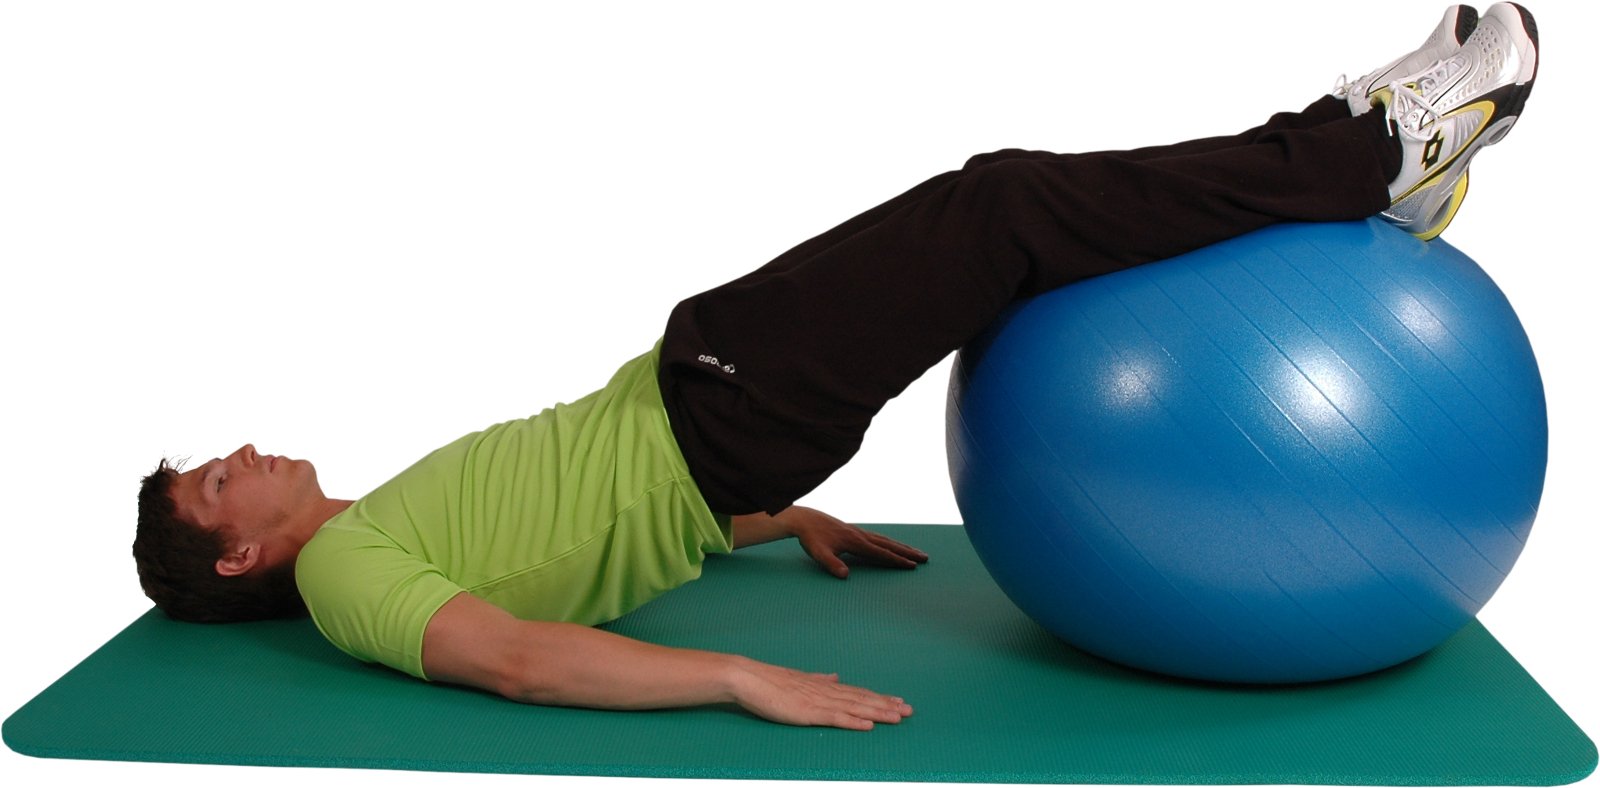 Yoga ball 55 cm Rood Mambo Max